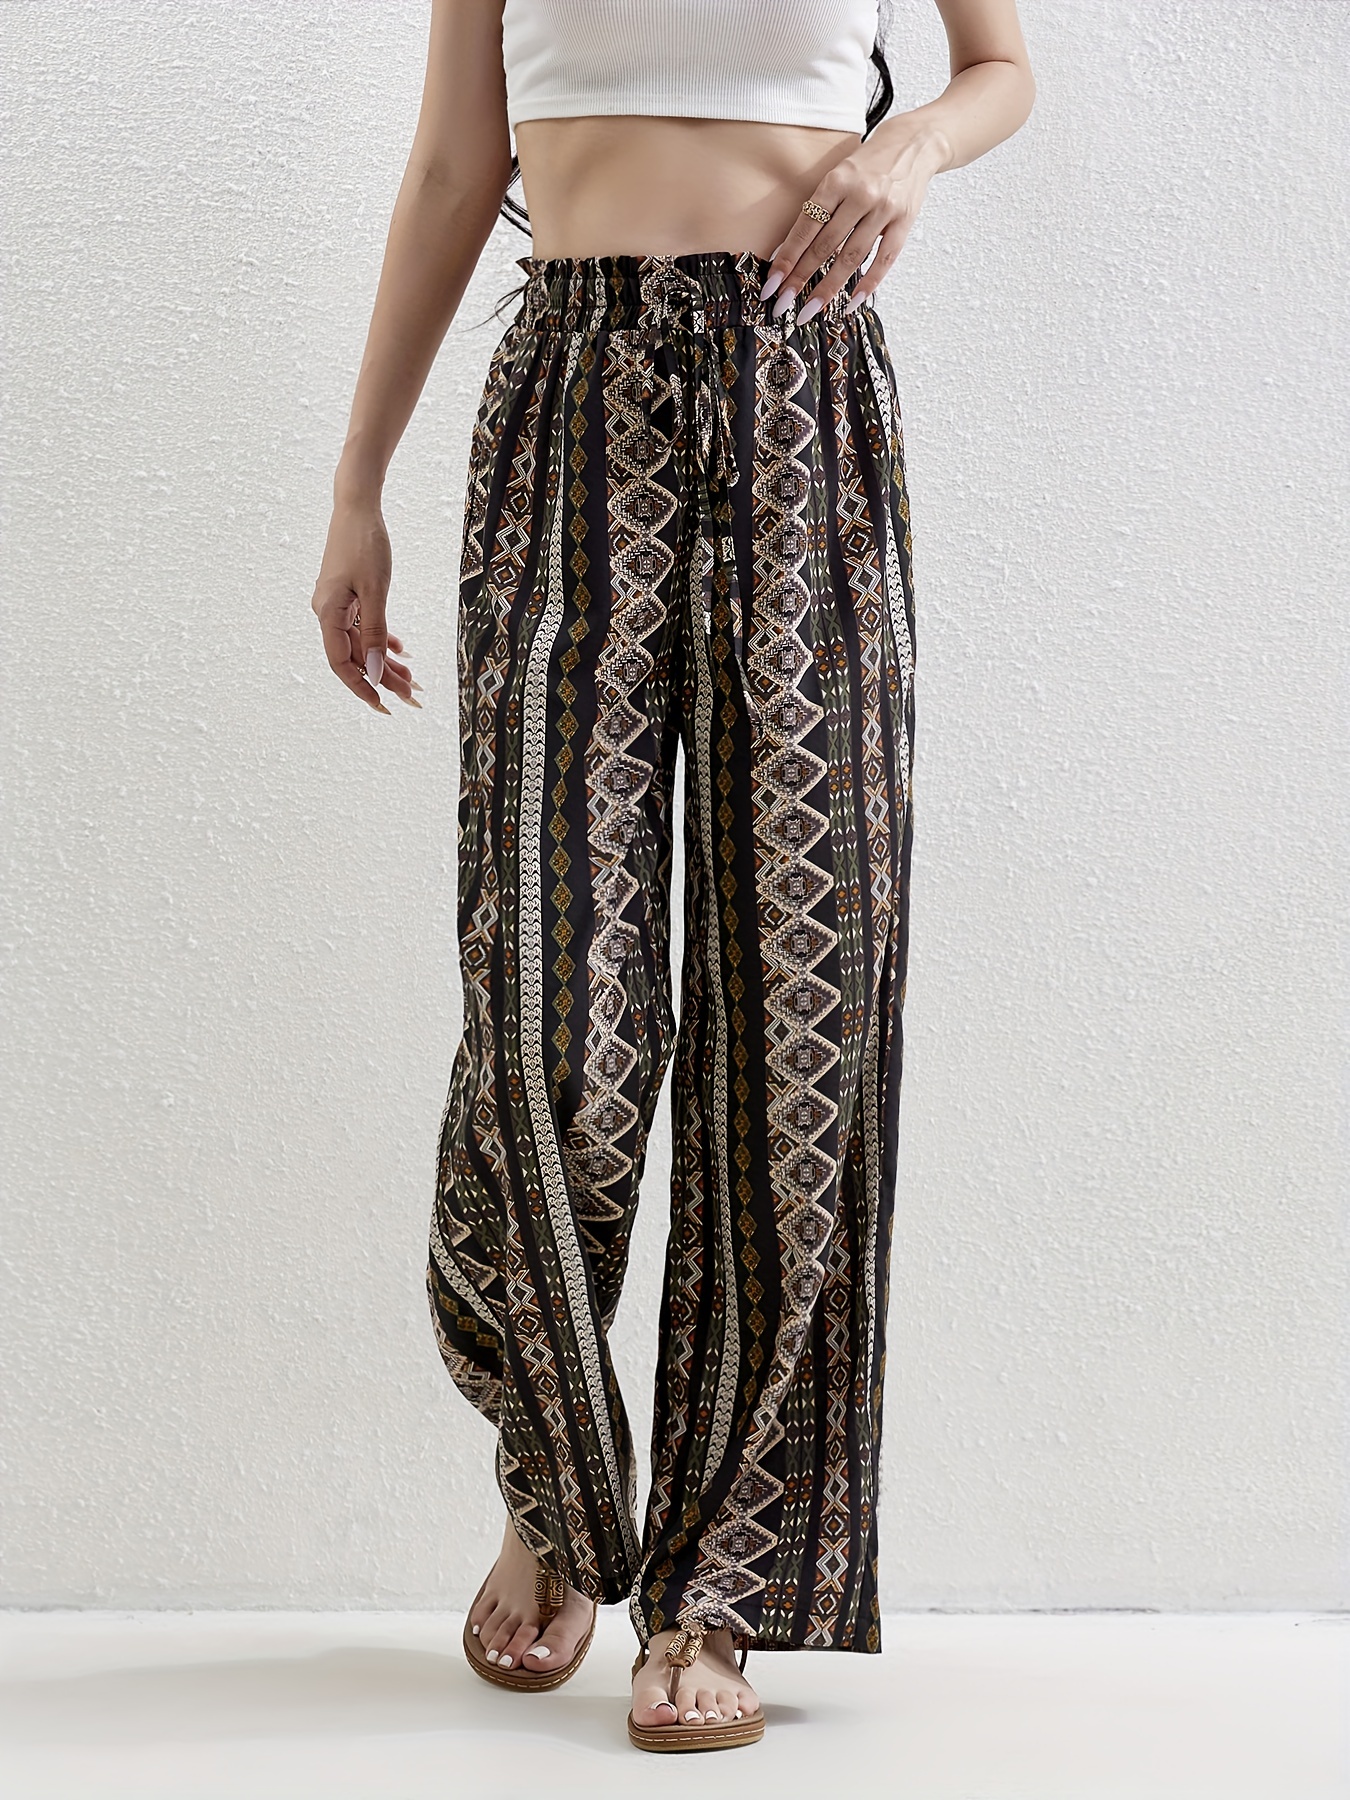 Boho Style Flare Leg Pants, Tribal Print Pants For Spring & Fall, Women's  Clothing